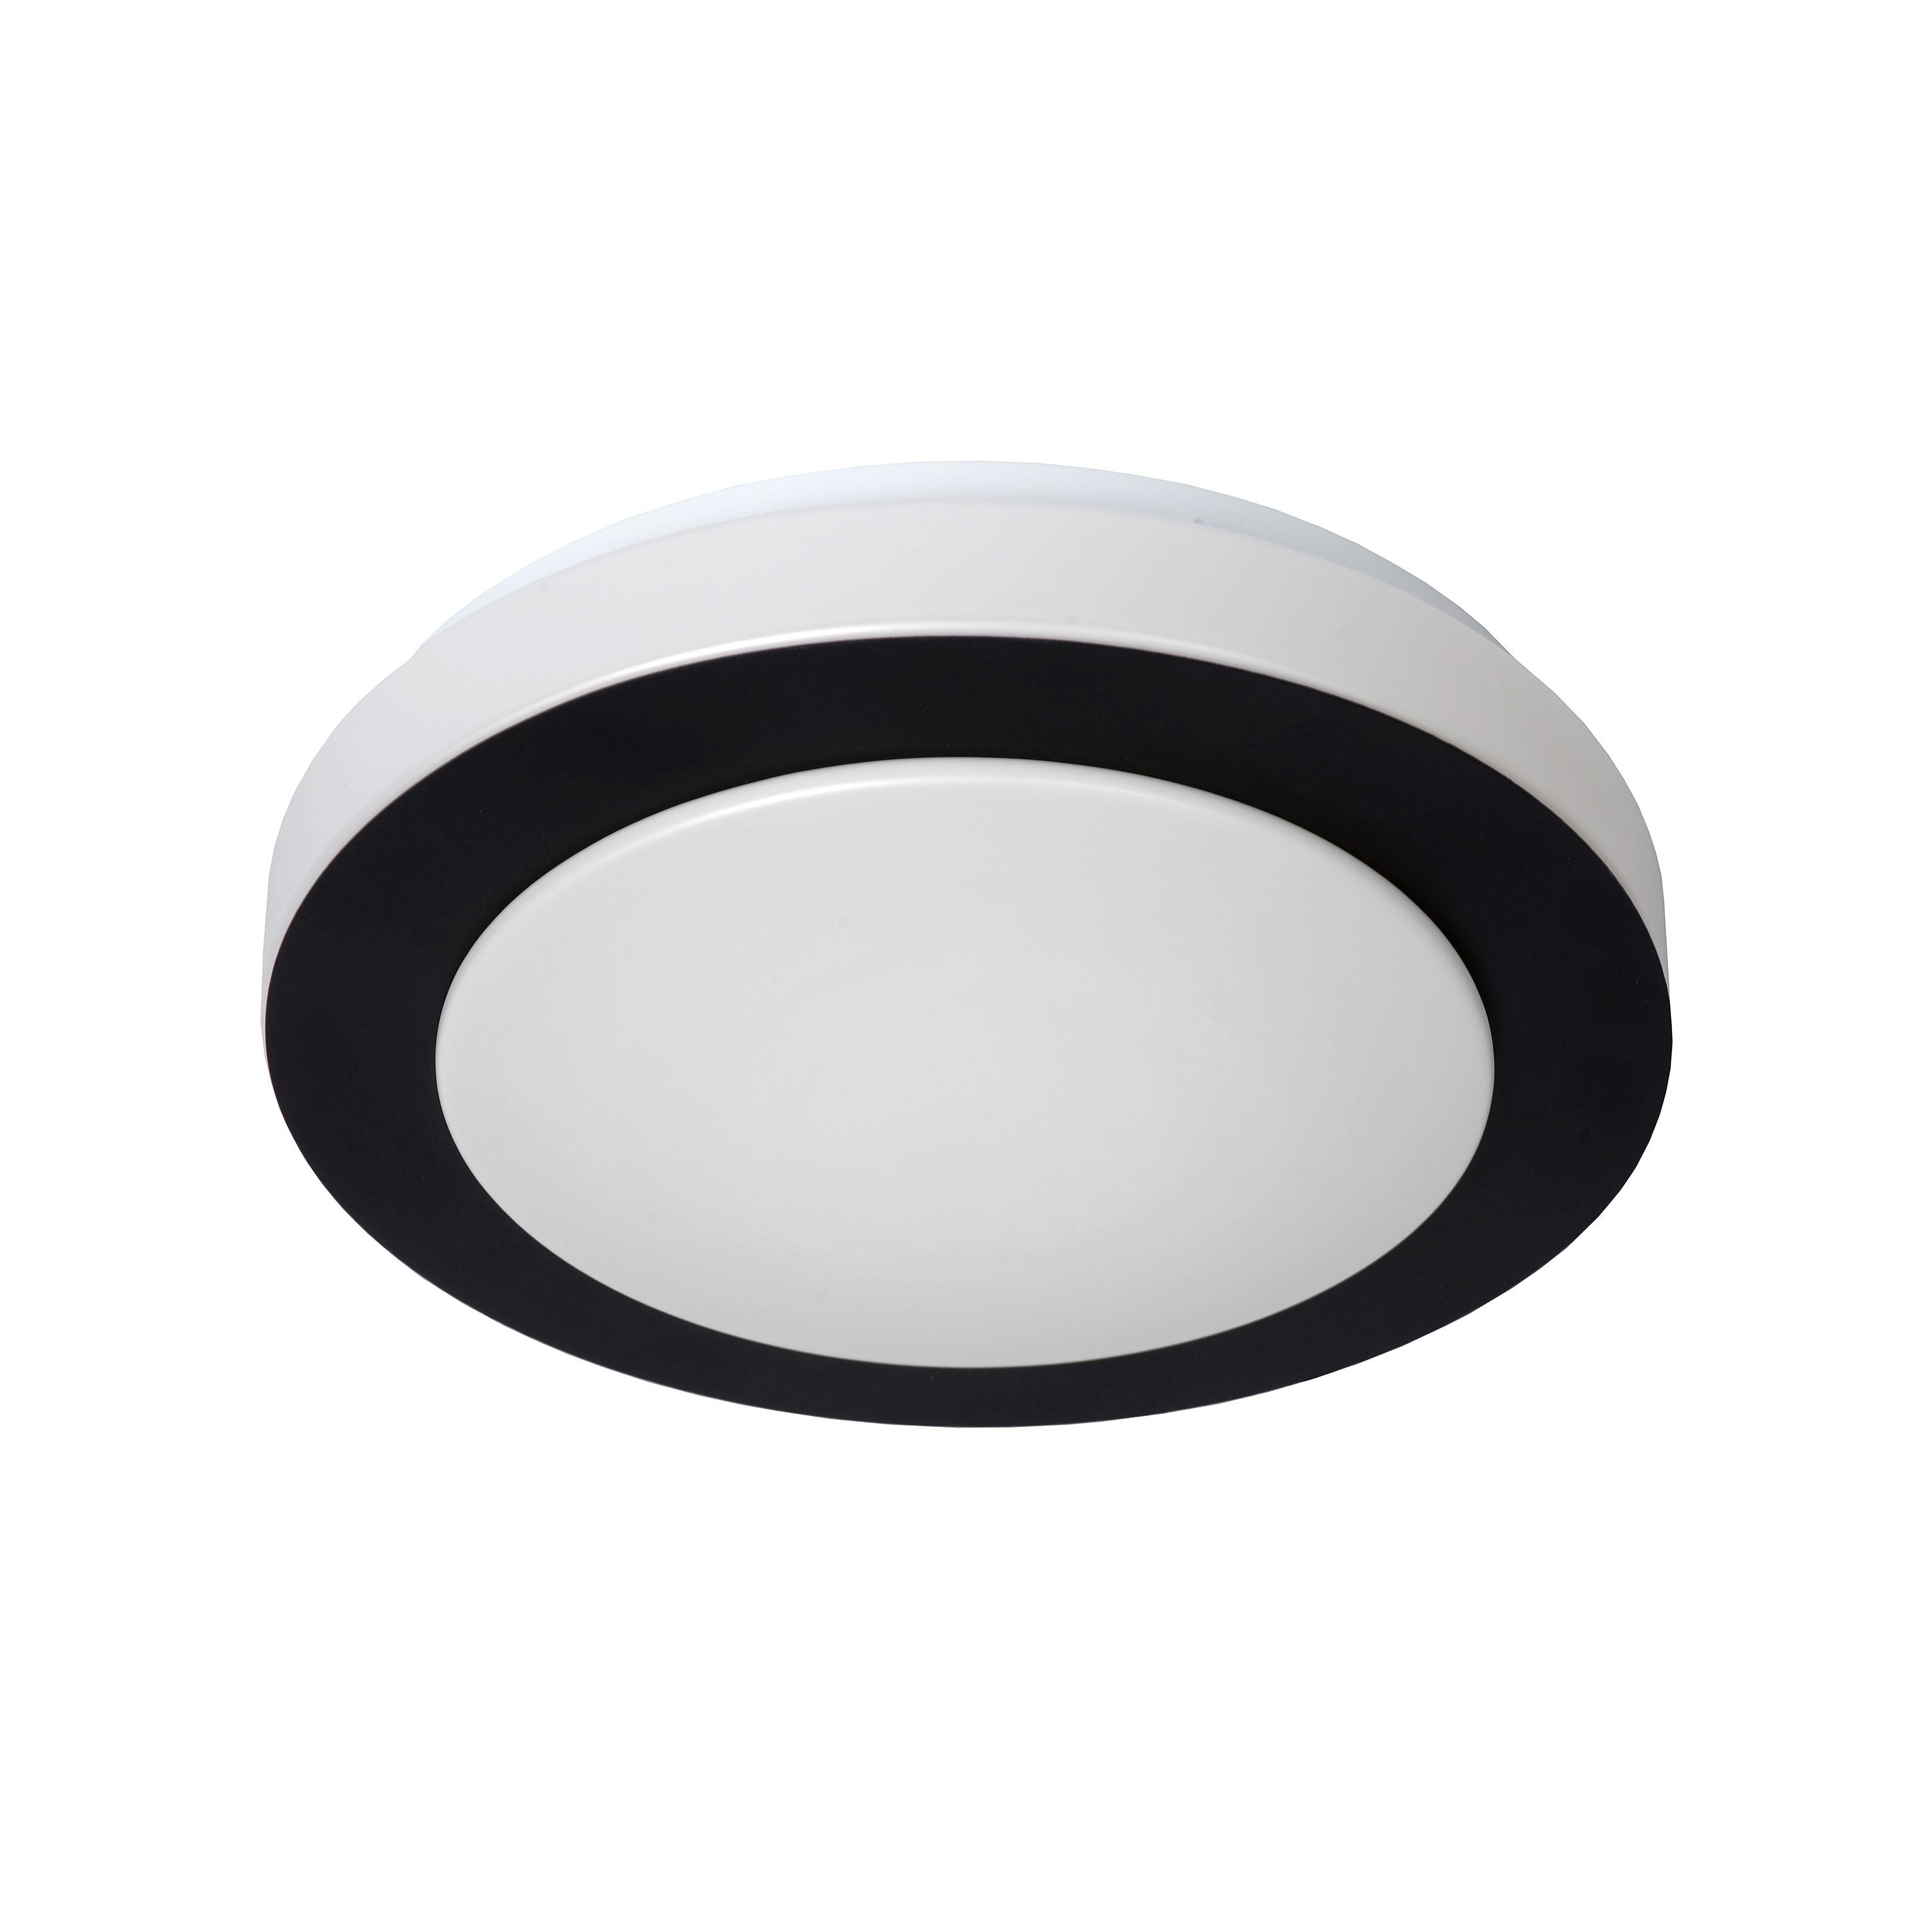 Wrak Ongunstig Actief Lucide Dimy - plafondlamp badkamer - Ø 28,6 x 8 cm - 12W dimbare LED incl.  - IP21 - zwart en opaal | Lichtkoning